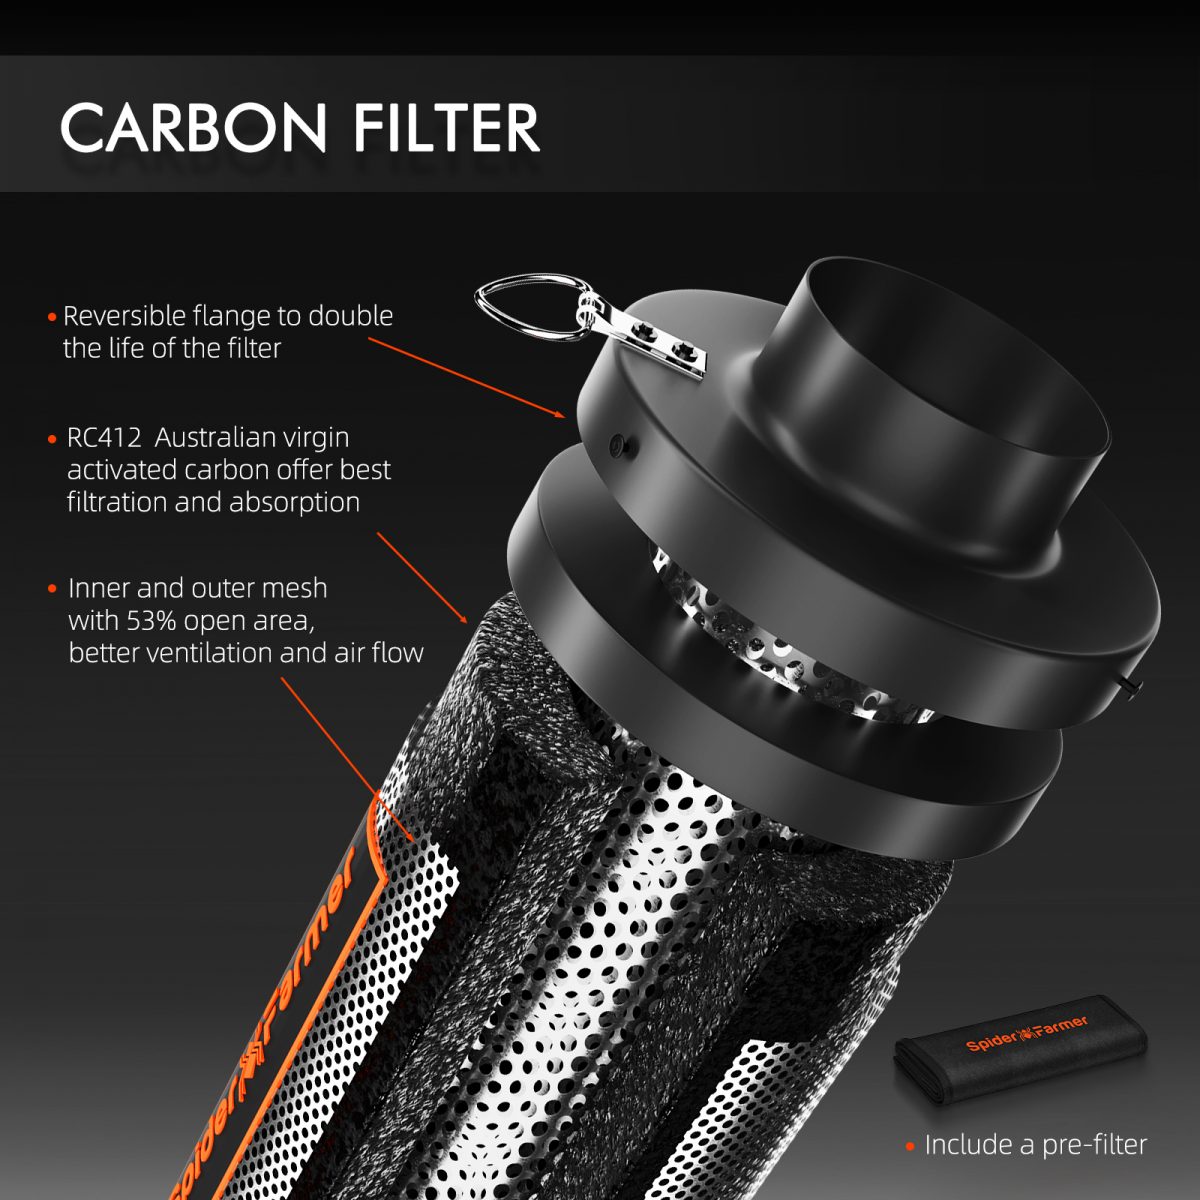 Spider Farmer Carbon Filter Specification